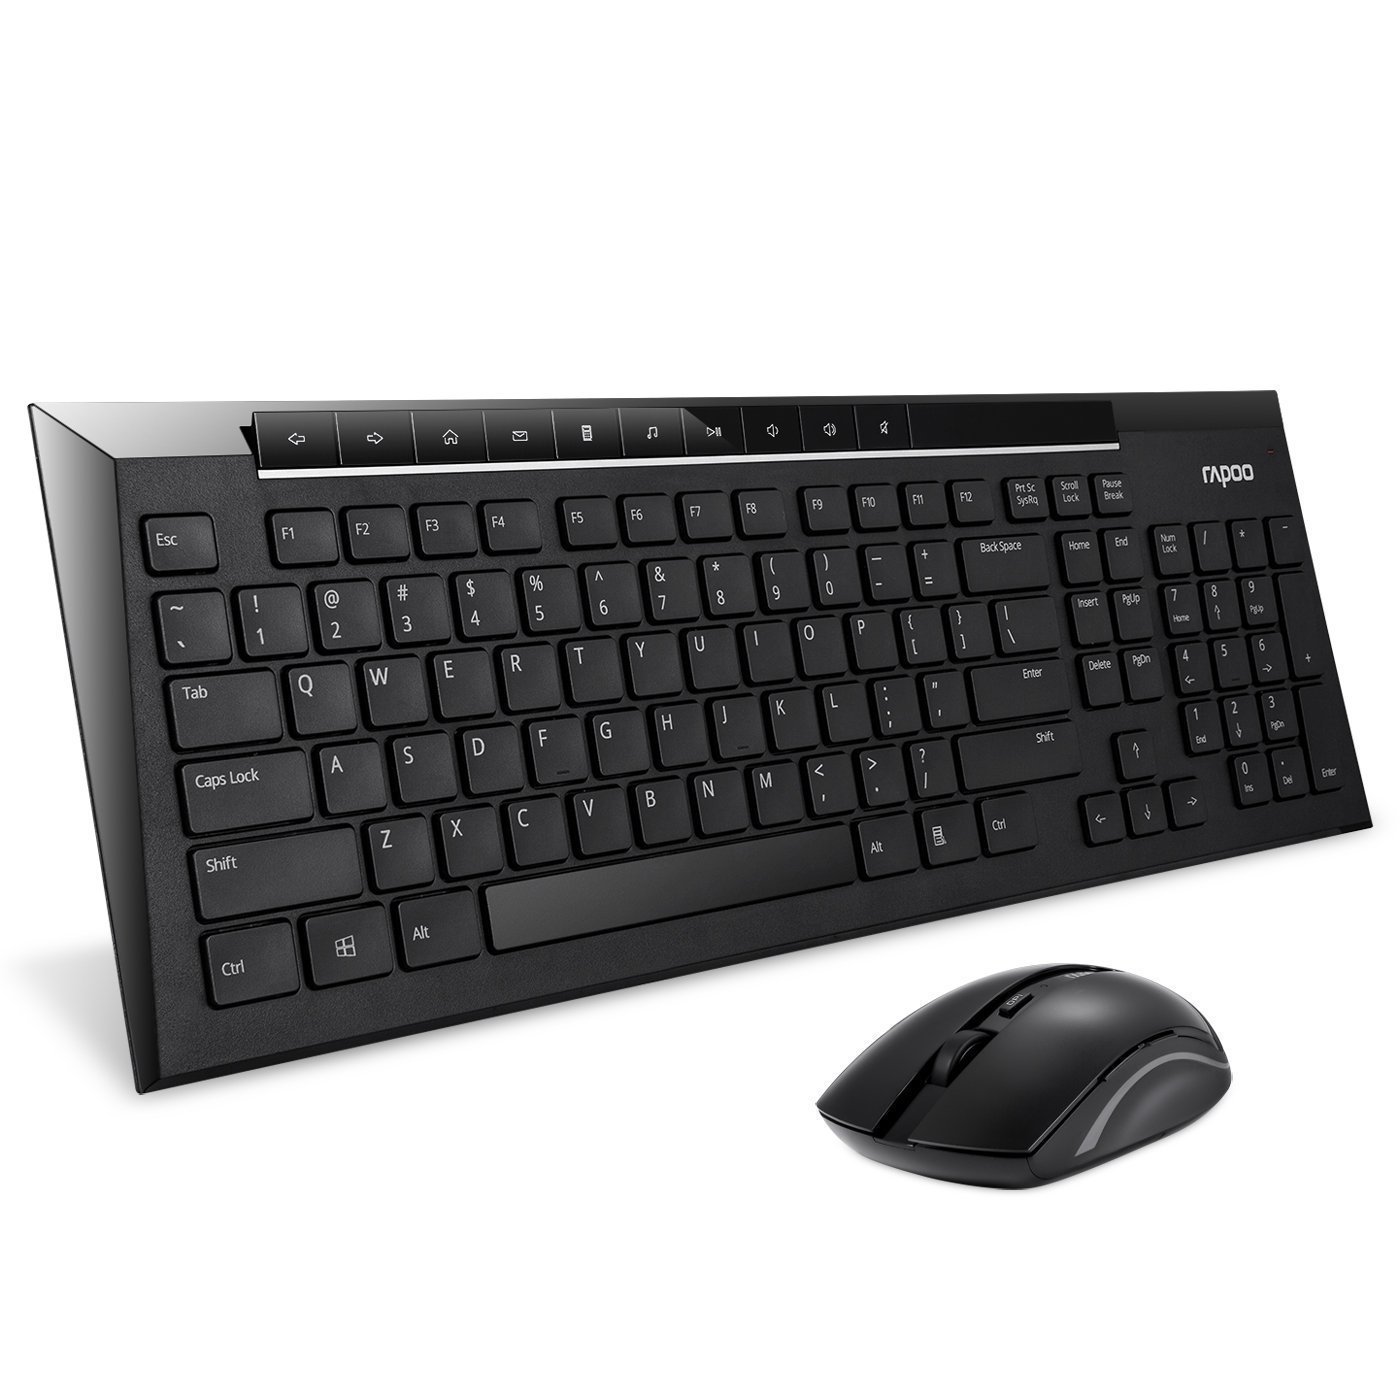 Rapoo 8200P Wireless Keyboard Mouse, Black